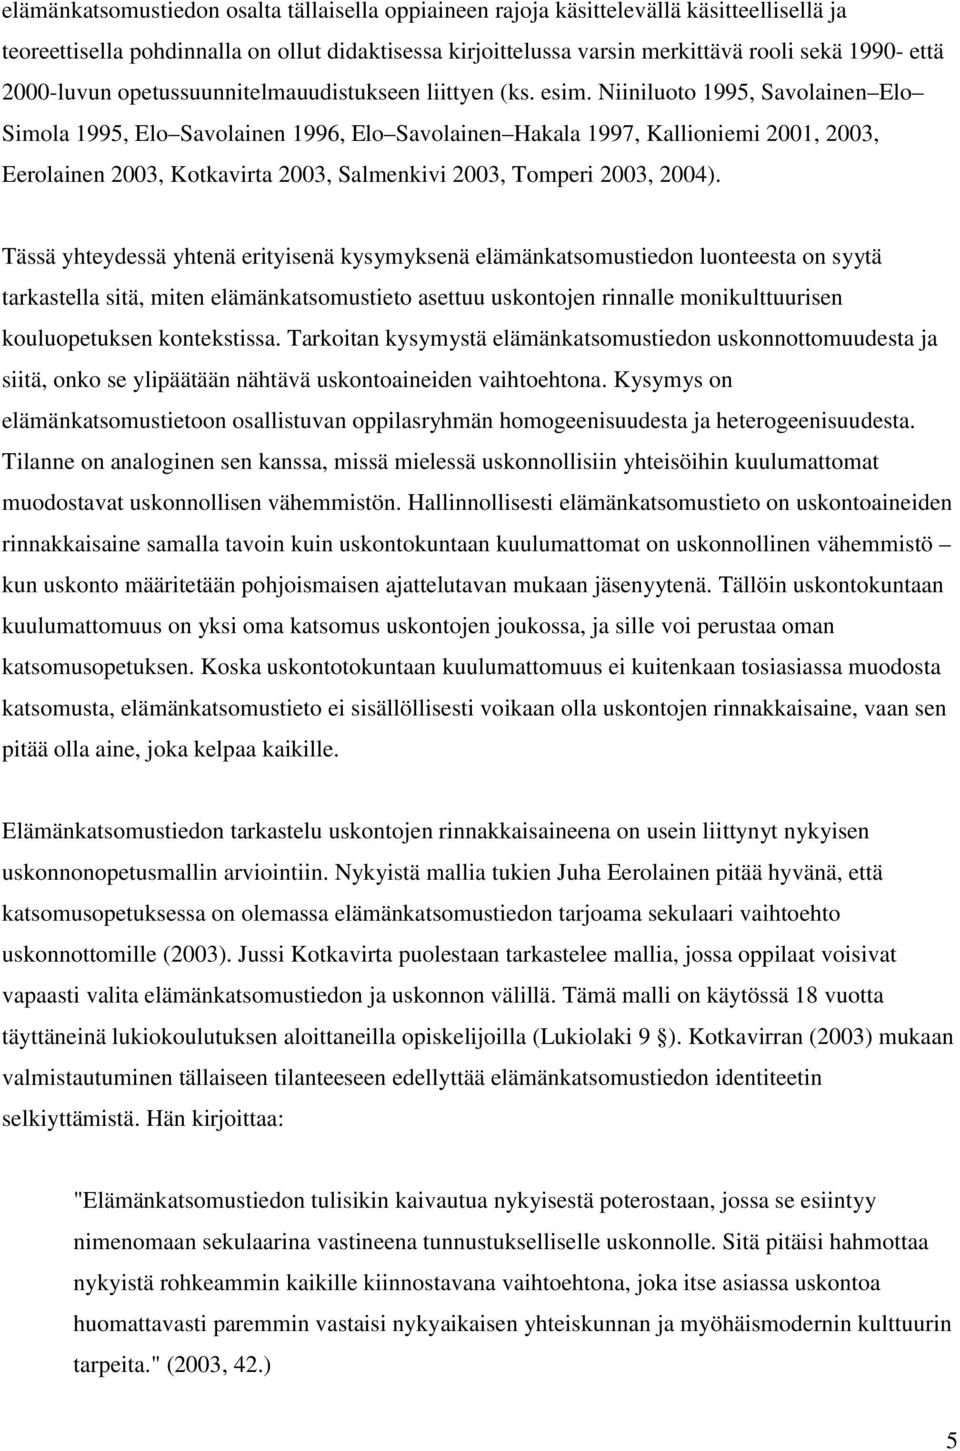 Niiniluoto 1995, Savolainen Elo Simola 1995, Elo Savolainen 1996, Elo Savolainen Hakala 1997, Kallioniemi 2001, 2003, Eerolainen 2003, Kotkavirta 2003, Salmenkivi 2003, Tomperi 2003, 2004).